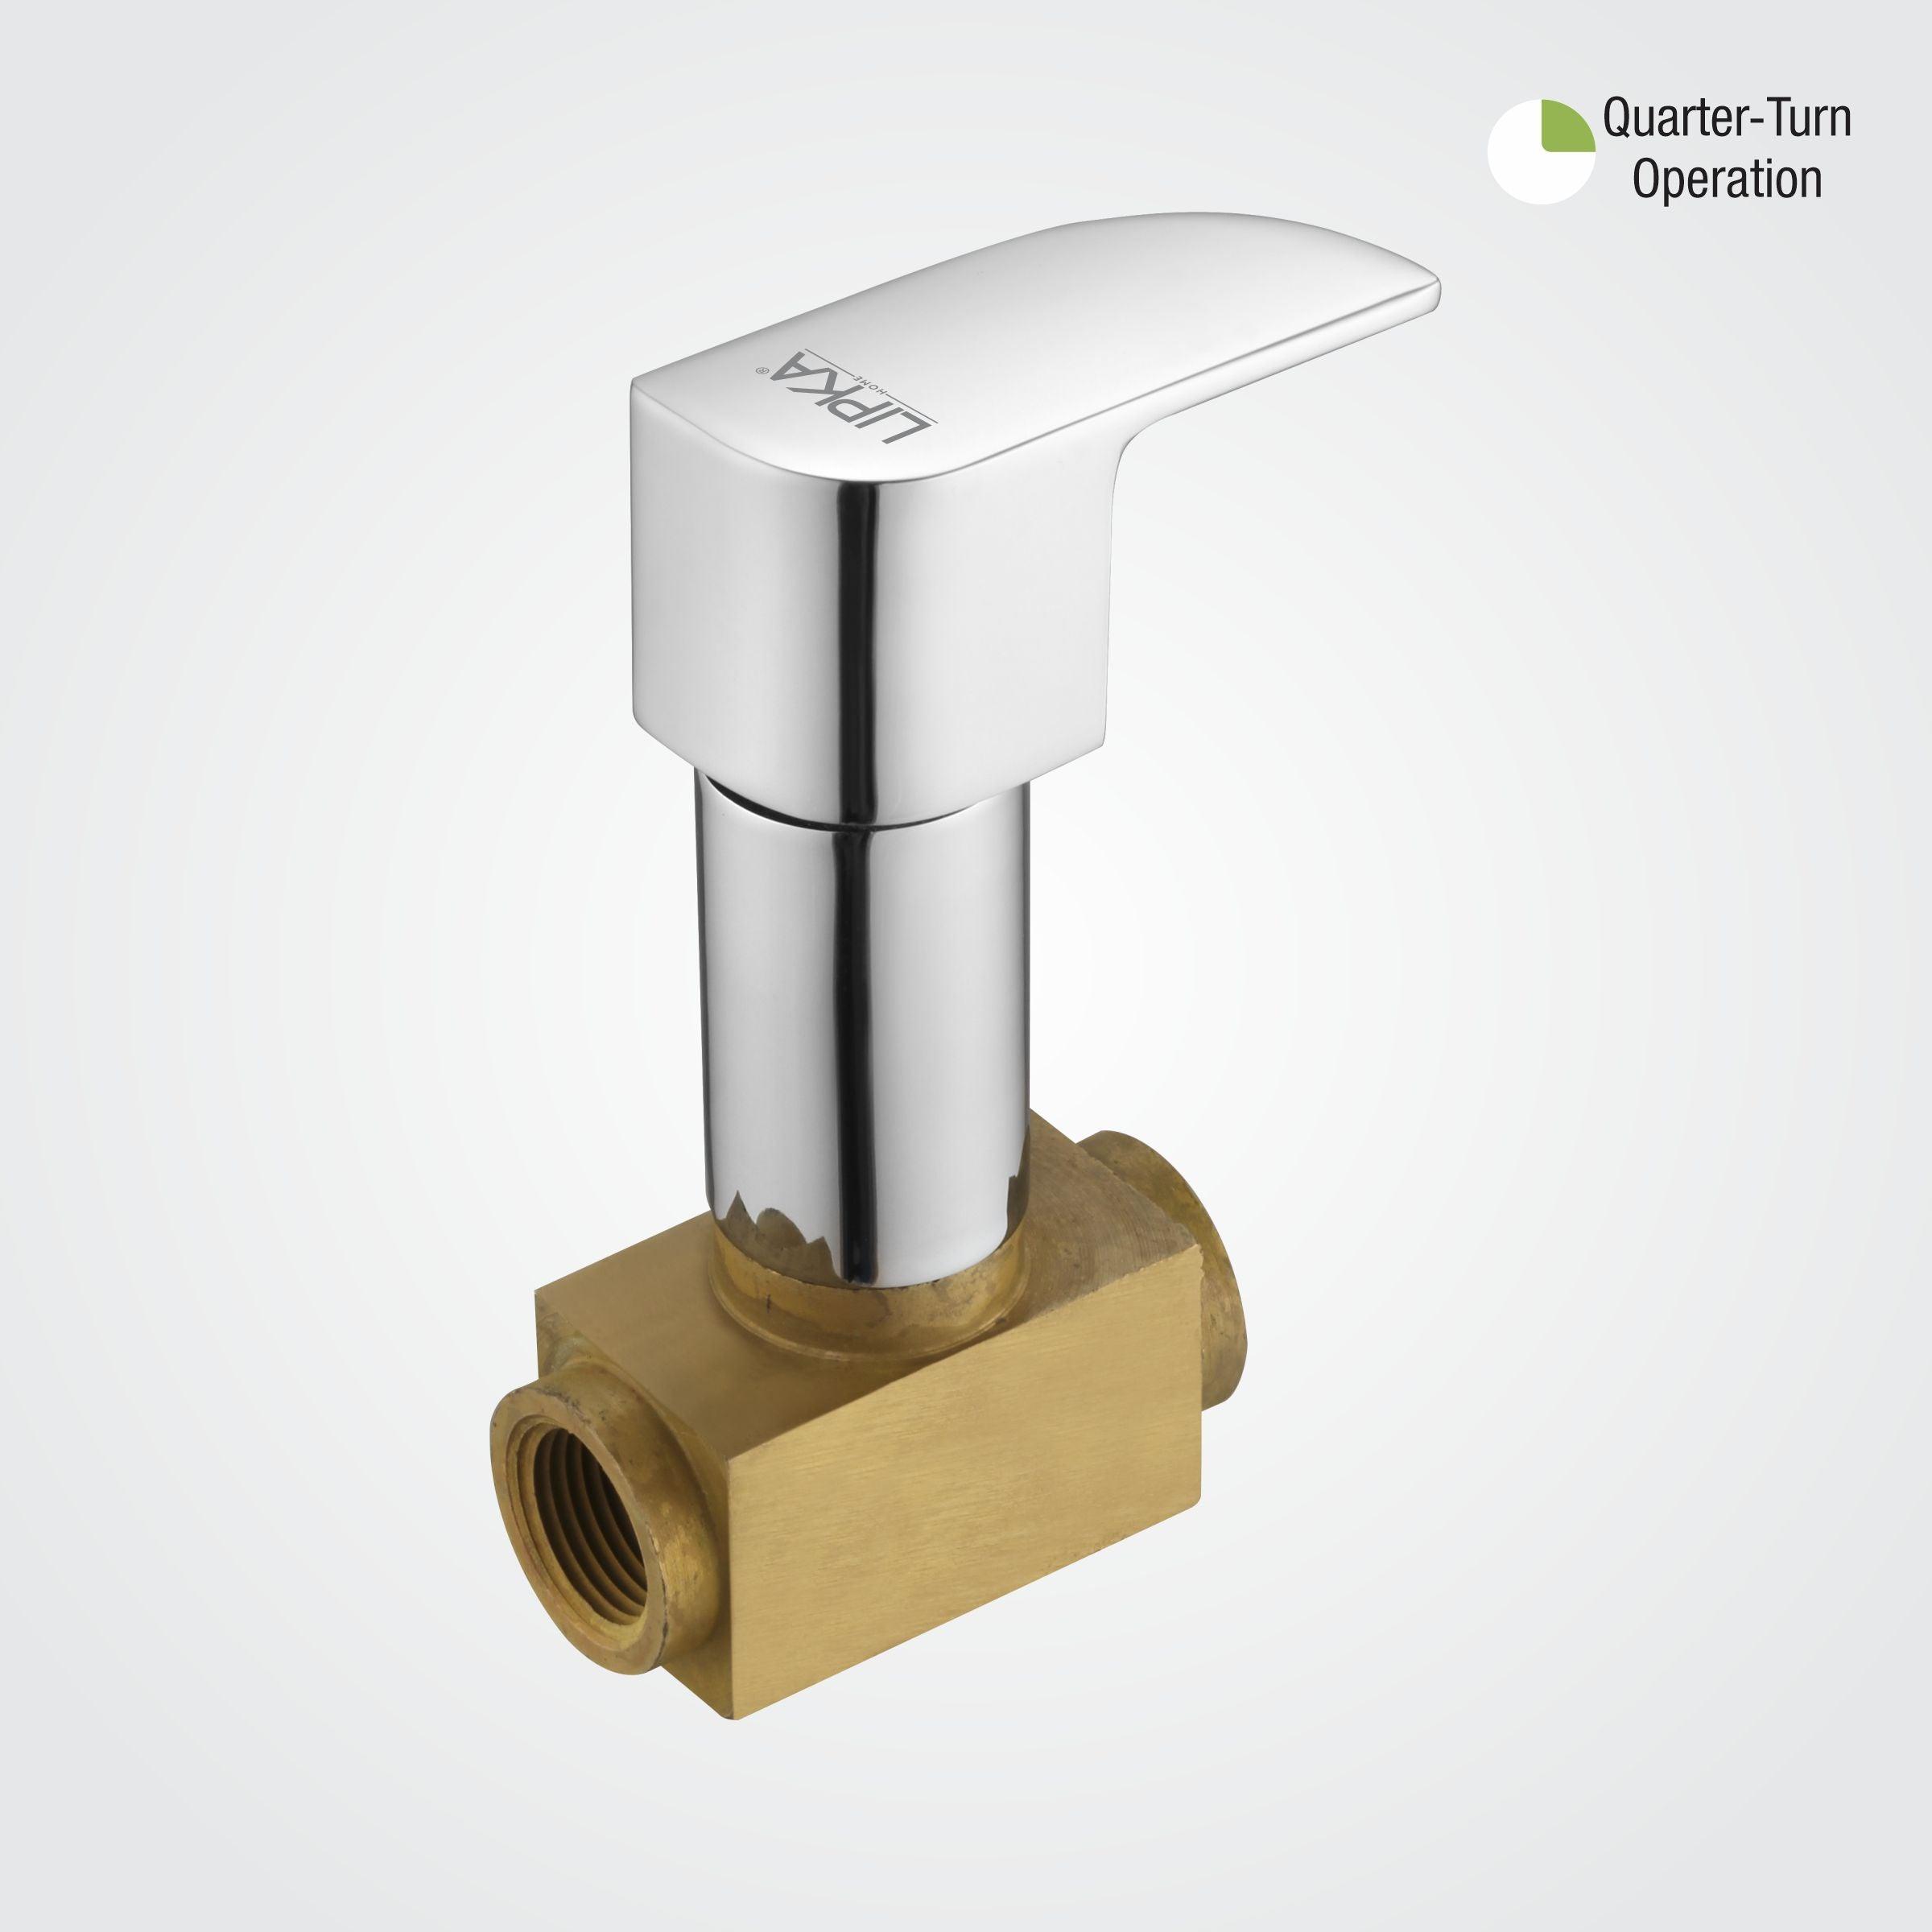 Arise Concealed Stop Valve 15mm Brass Faucet - LIPKA - Lipka Home